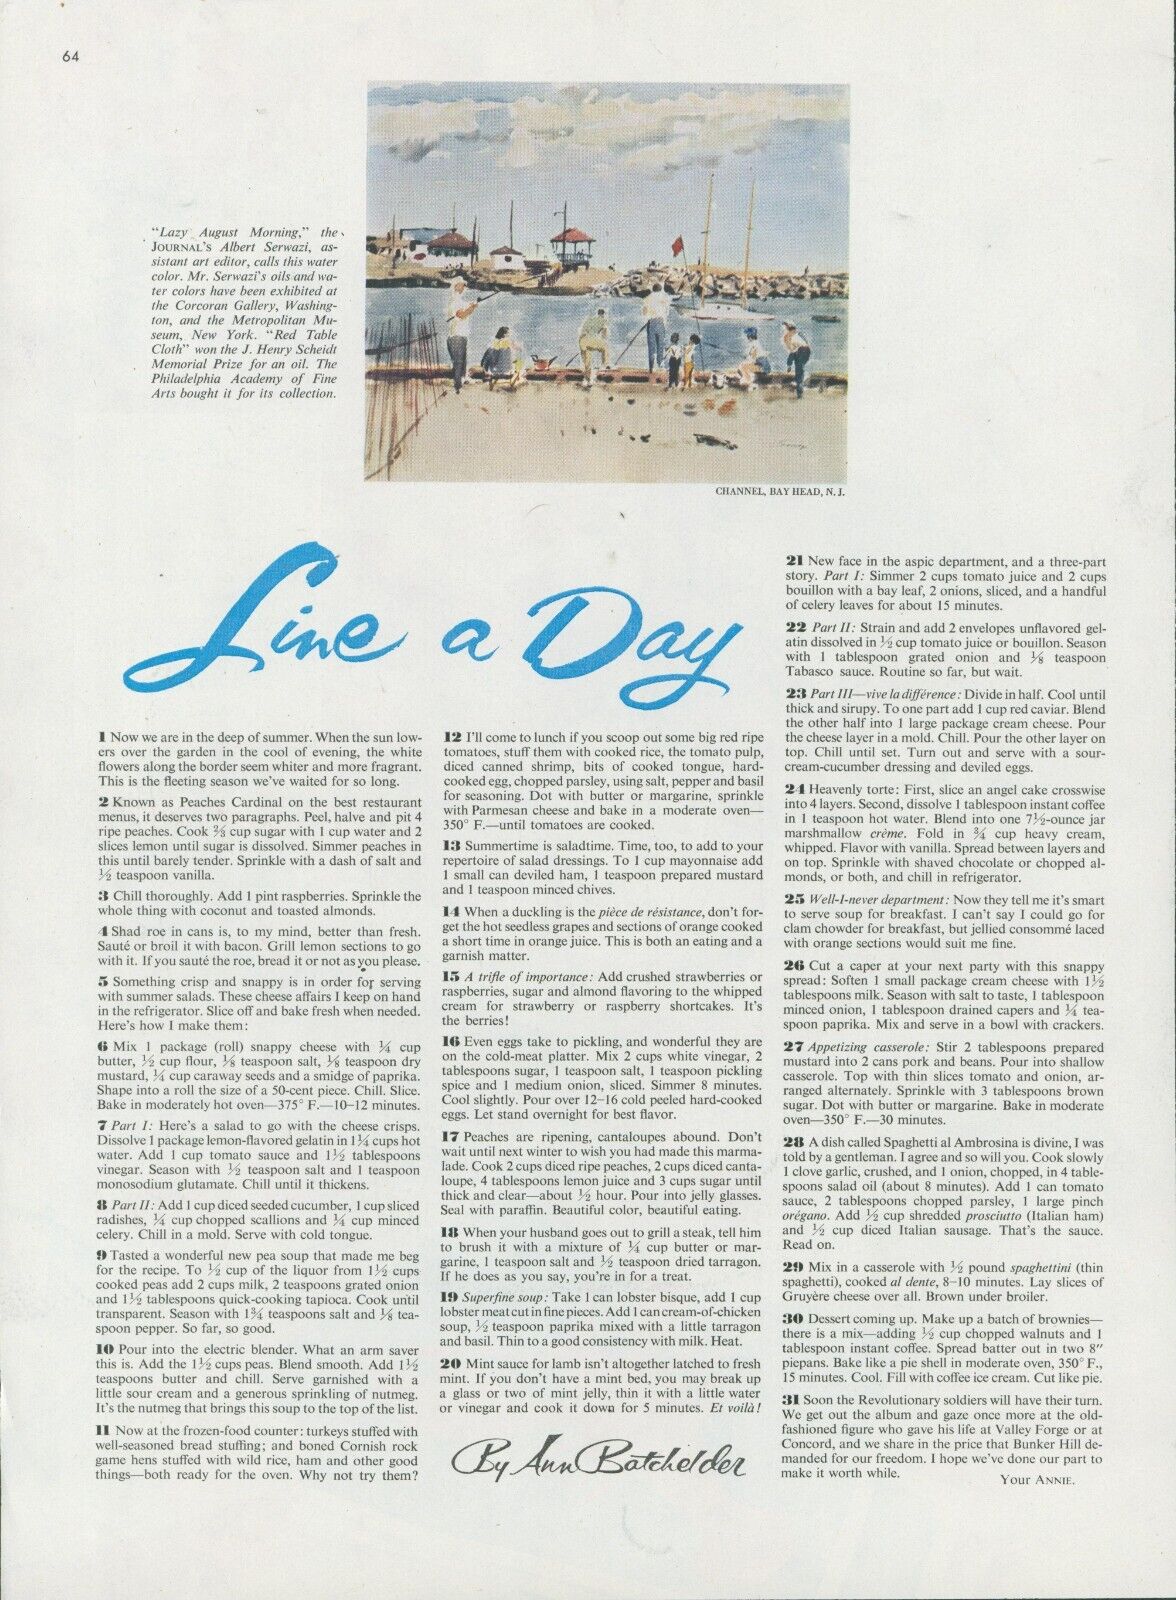 1955 Line A Day Ann Batchelder Channel Bay Head NJ Art Vintage Print Story LHJ4